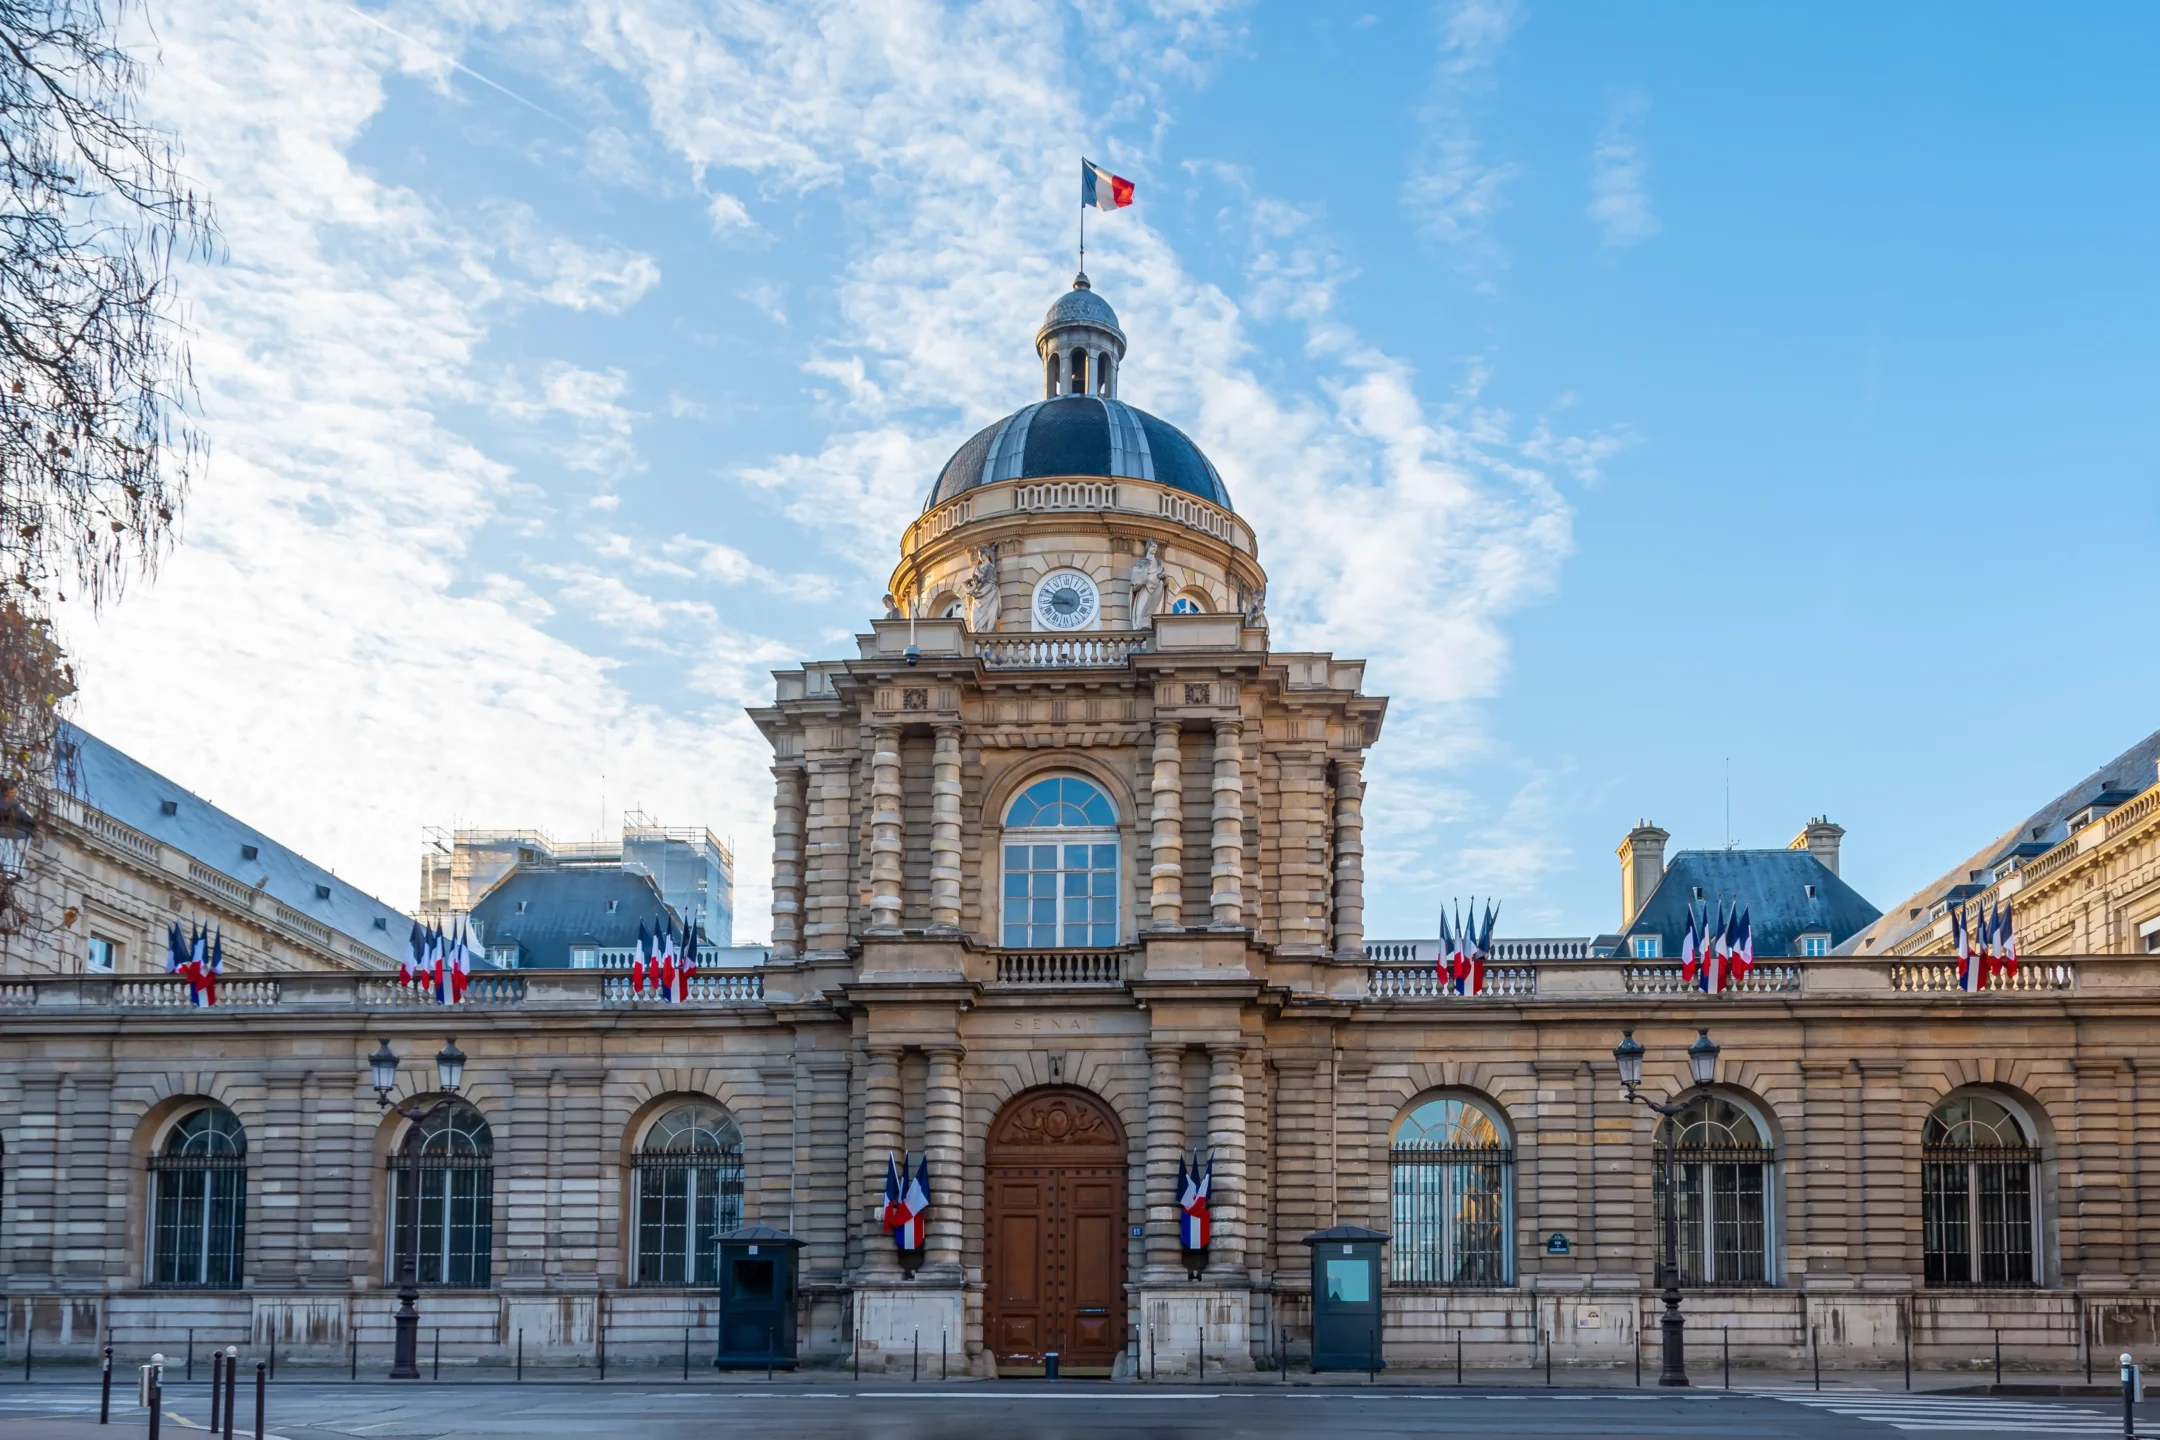 French Senate